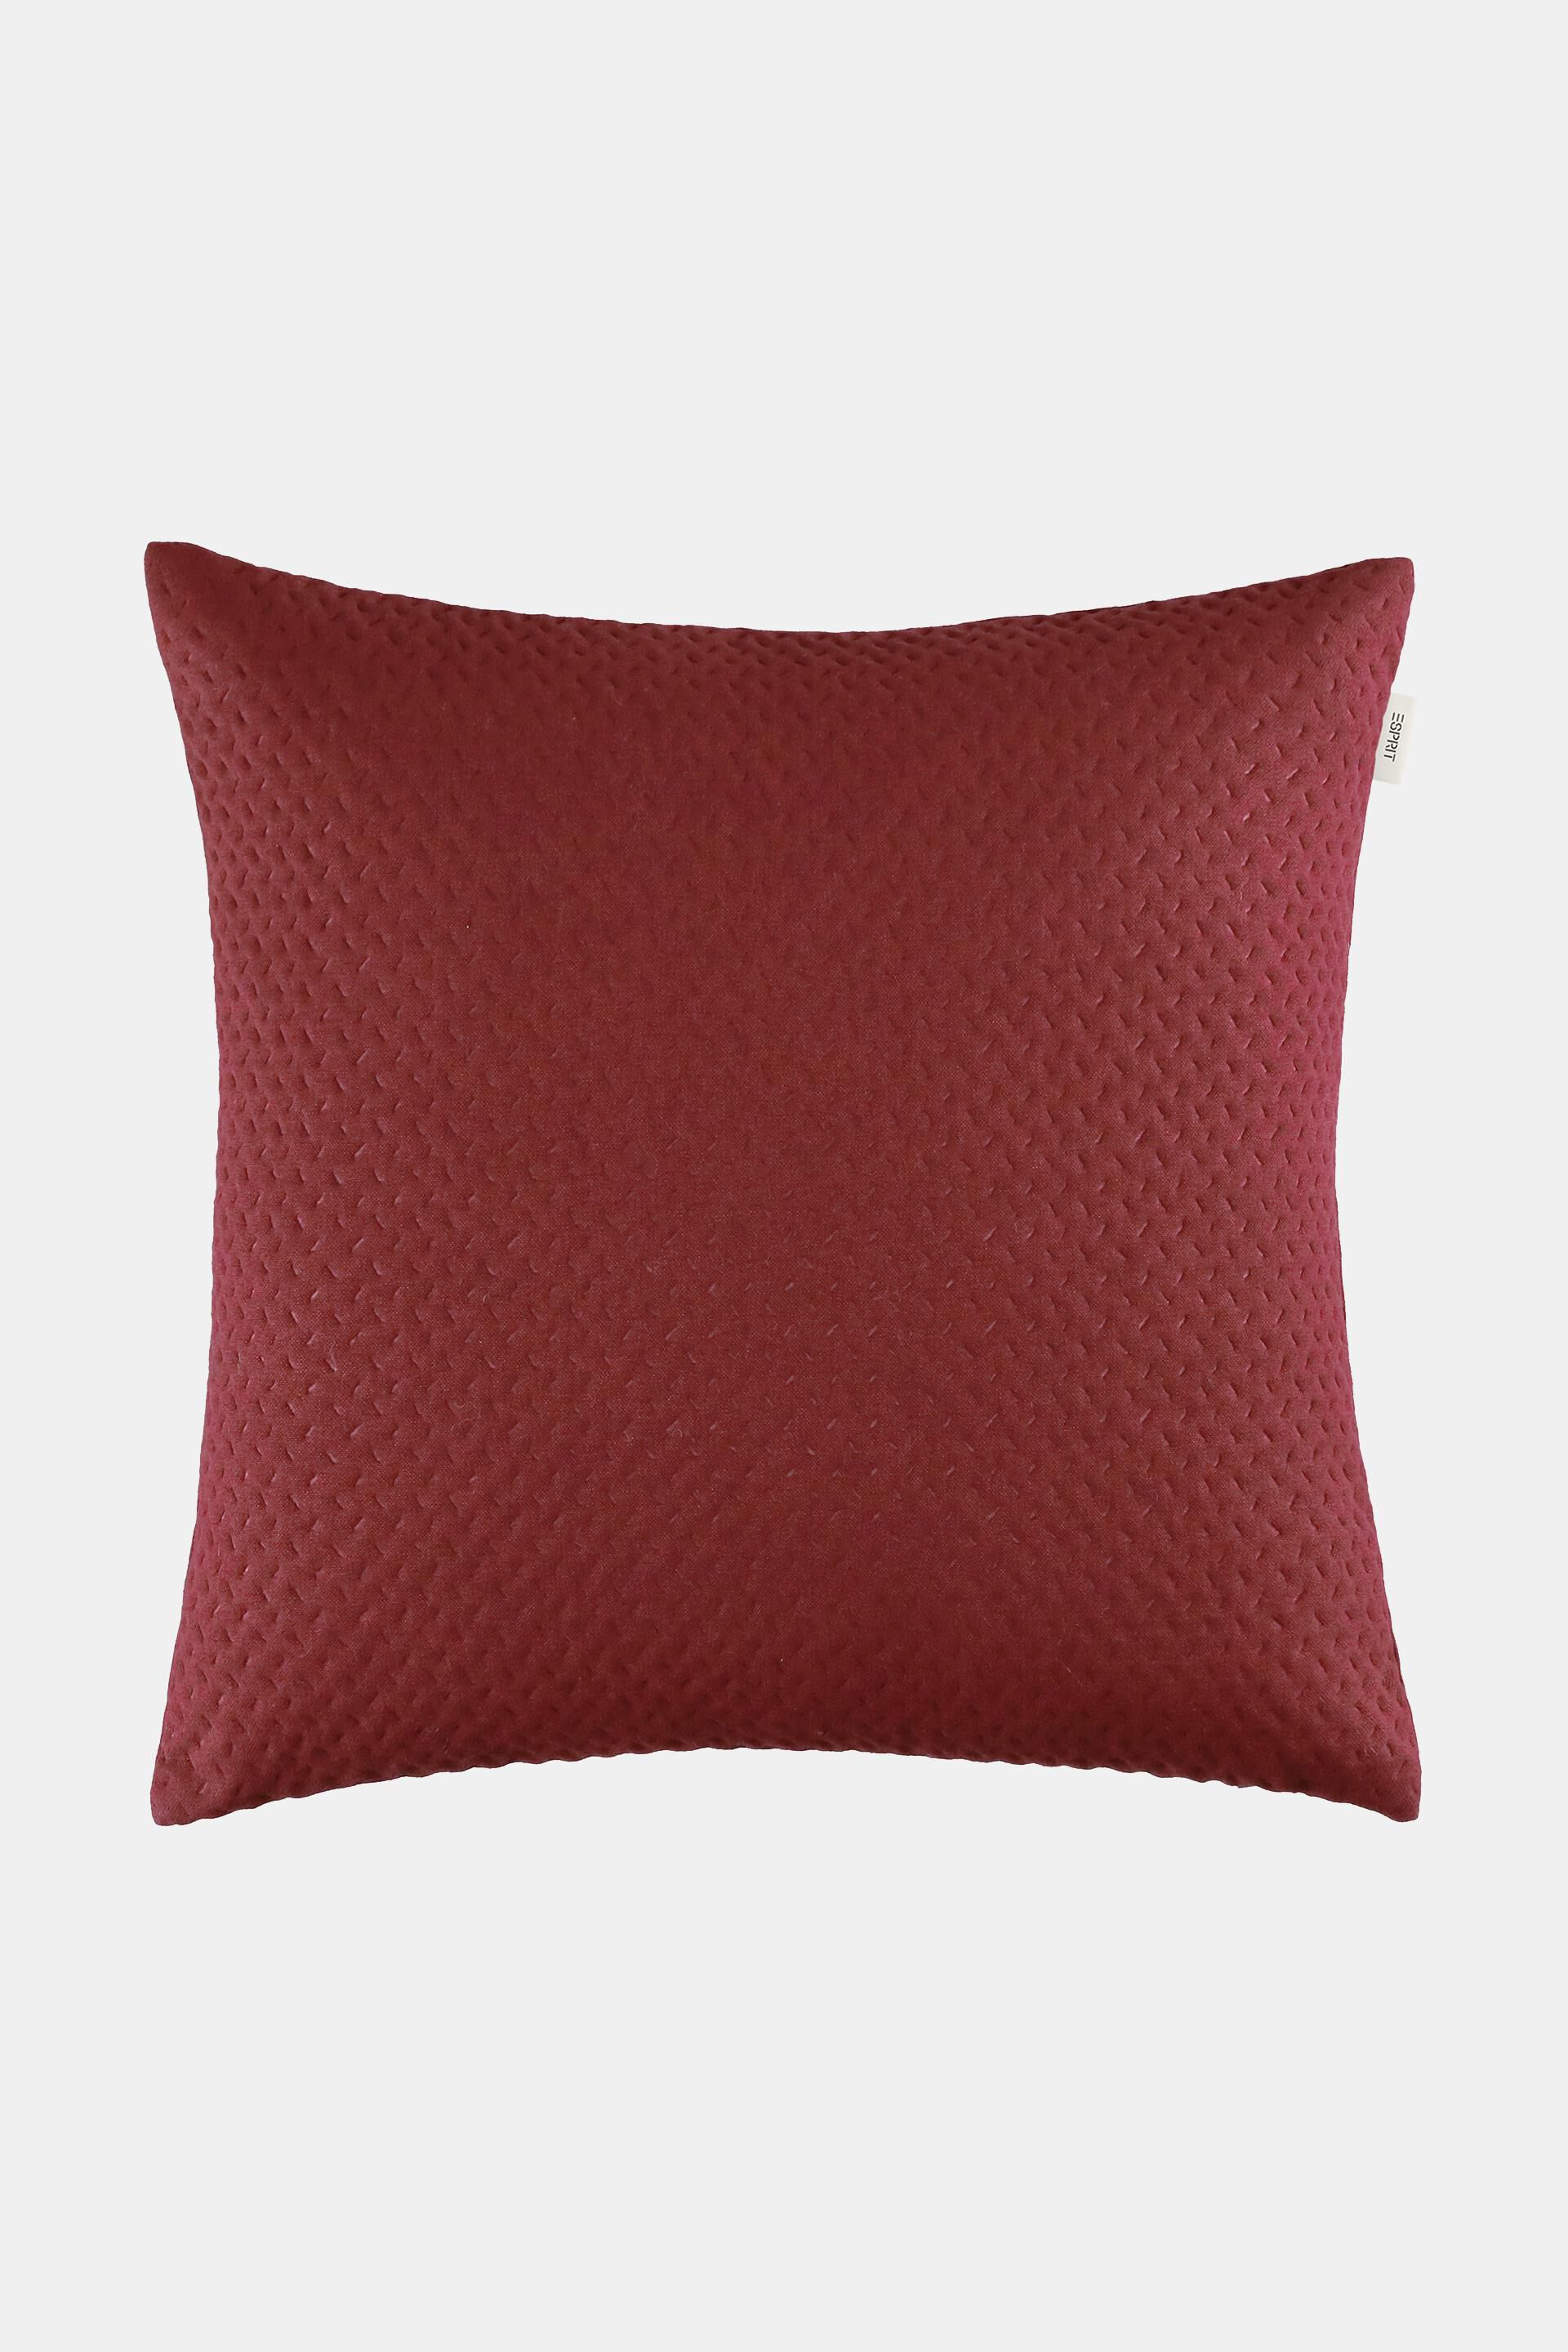 Esprit cover decorative cushion Woven